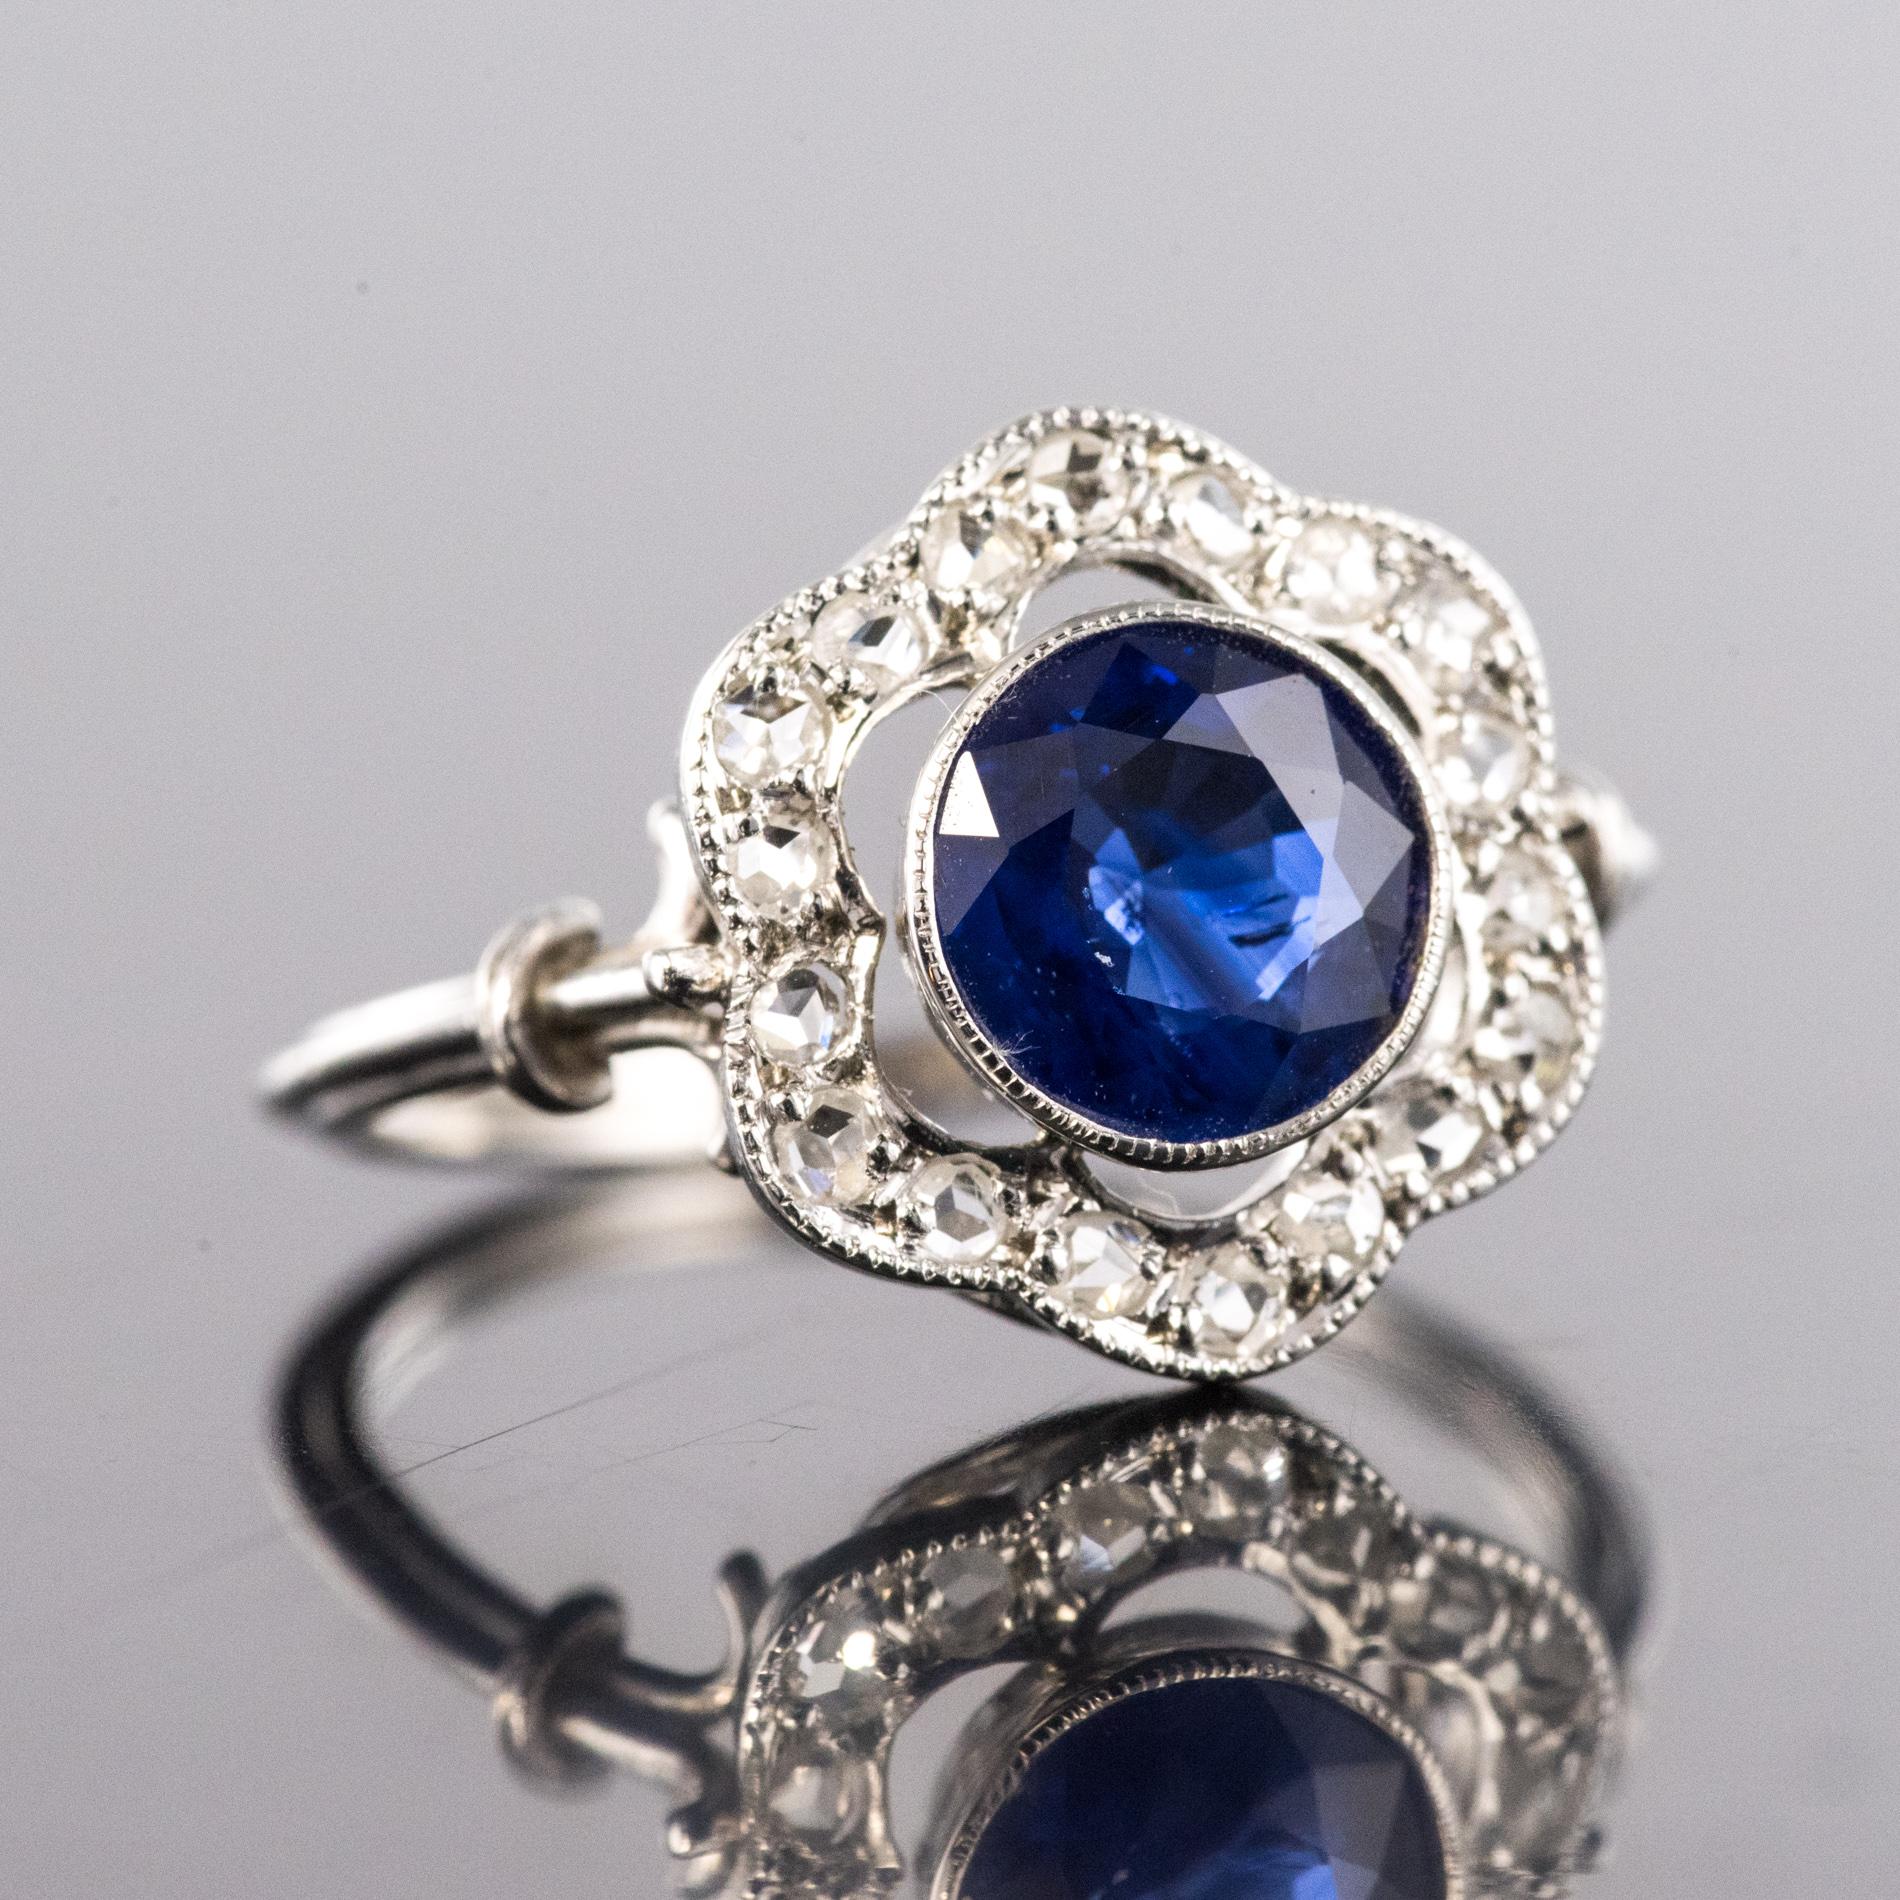 French 1920s Art Deco 1.23 Carat Sapphire Diamonds Platinum Ring 10